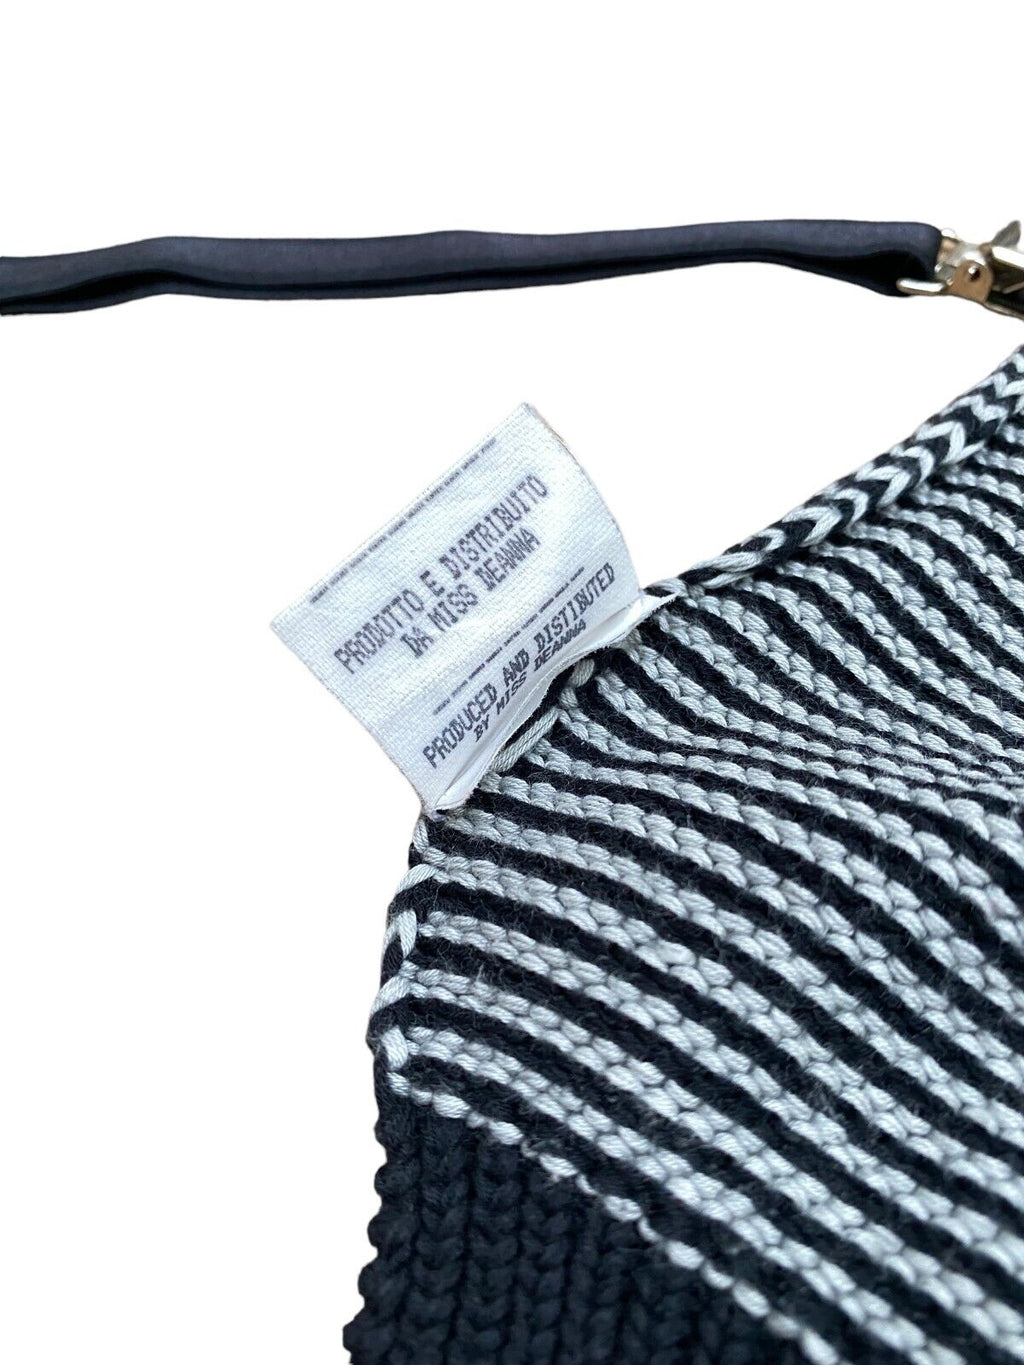 SS 1997 Striped Half Knit Sweater Size M